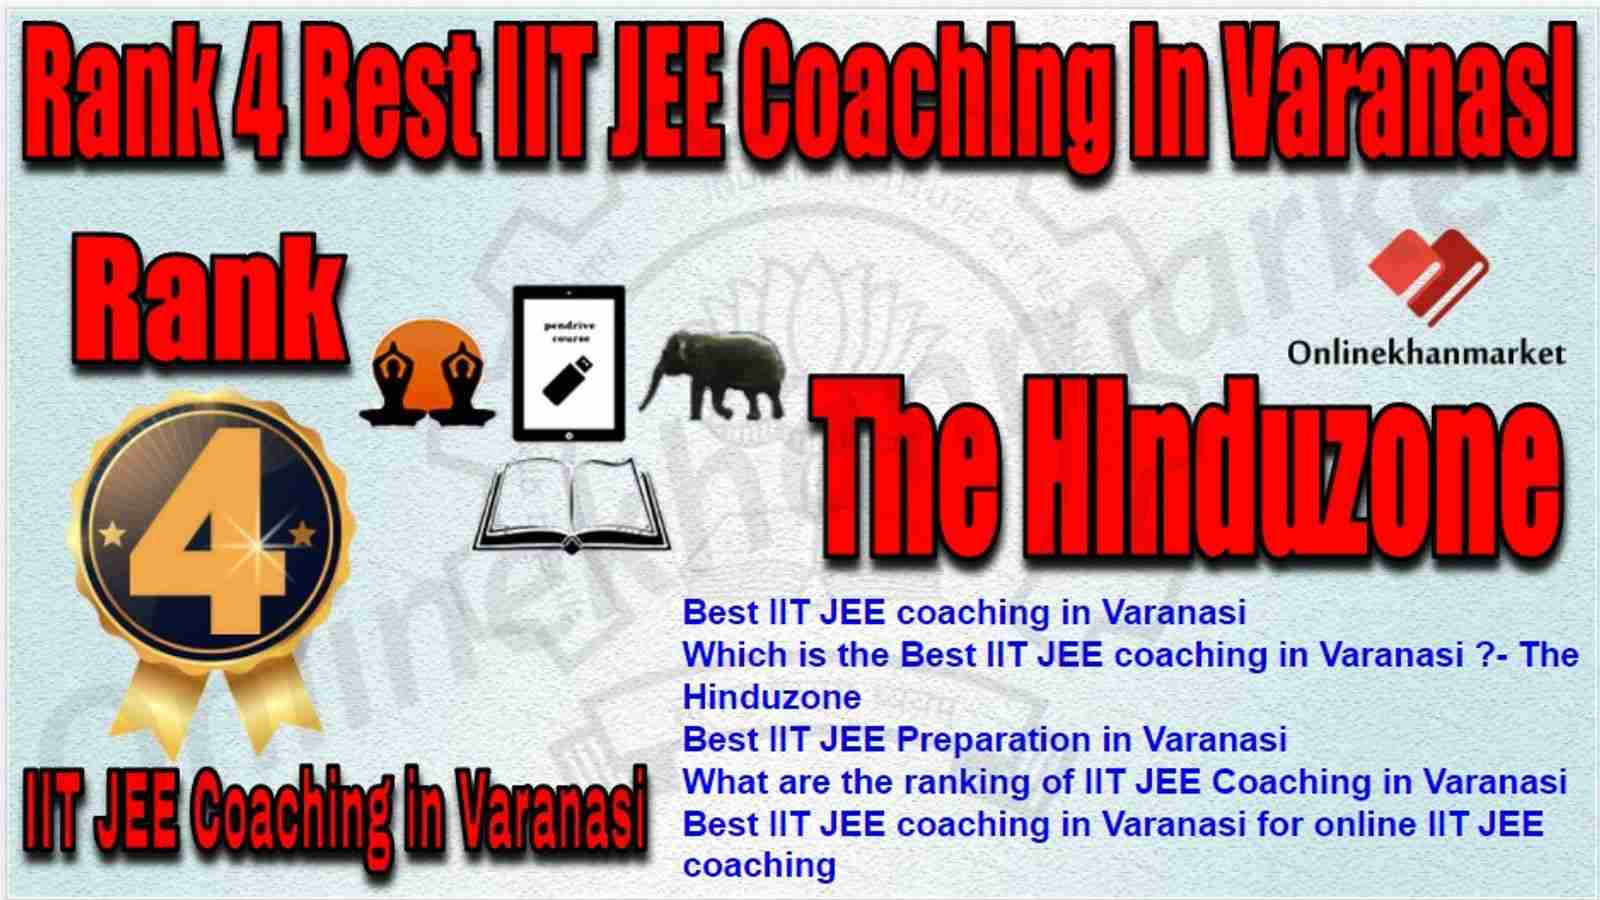 RANK 4 BEST IIT JEE Coaching in varanasi